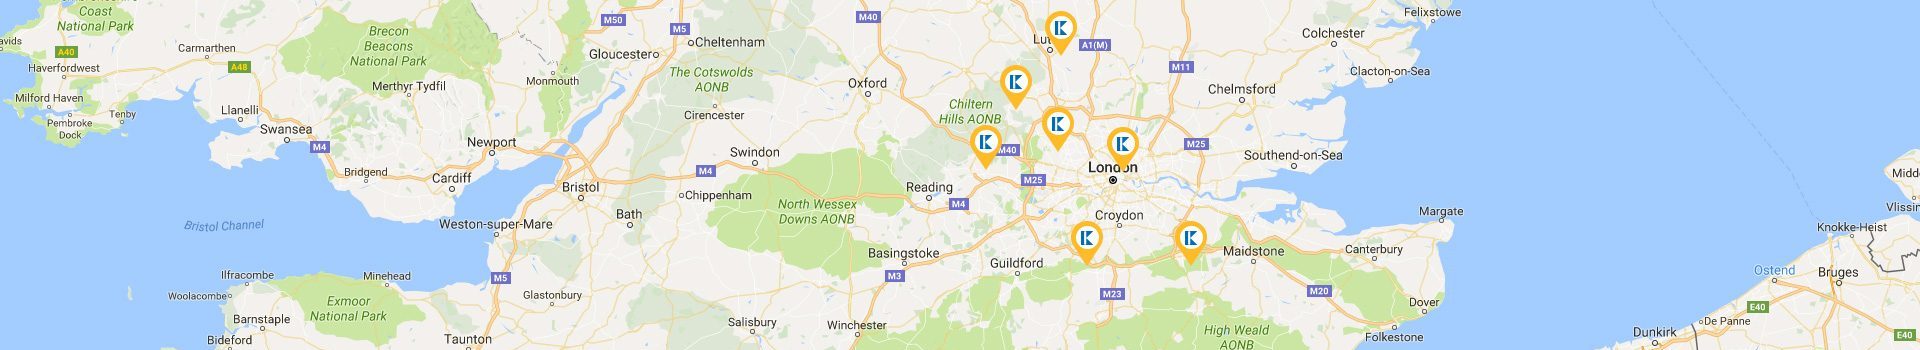 Kenwood PLC Map Locations